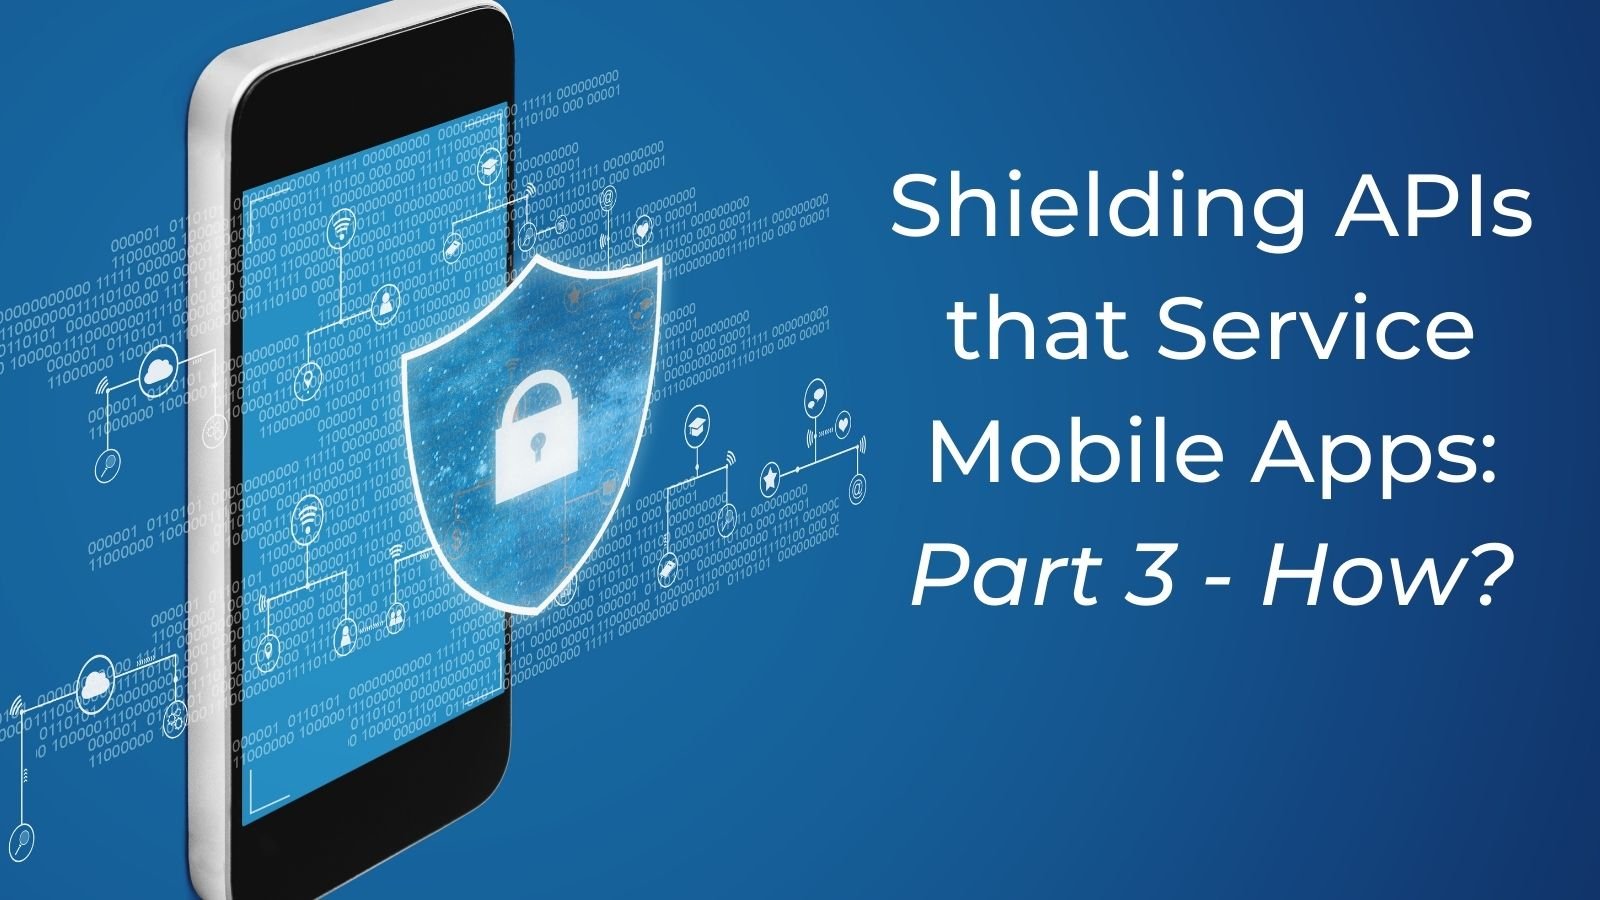 Shielding APIs that Service Mobile Apps Part 3 - How